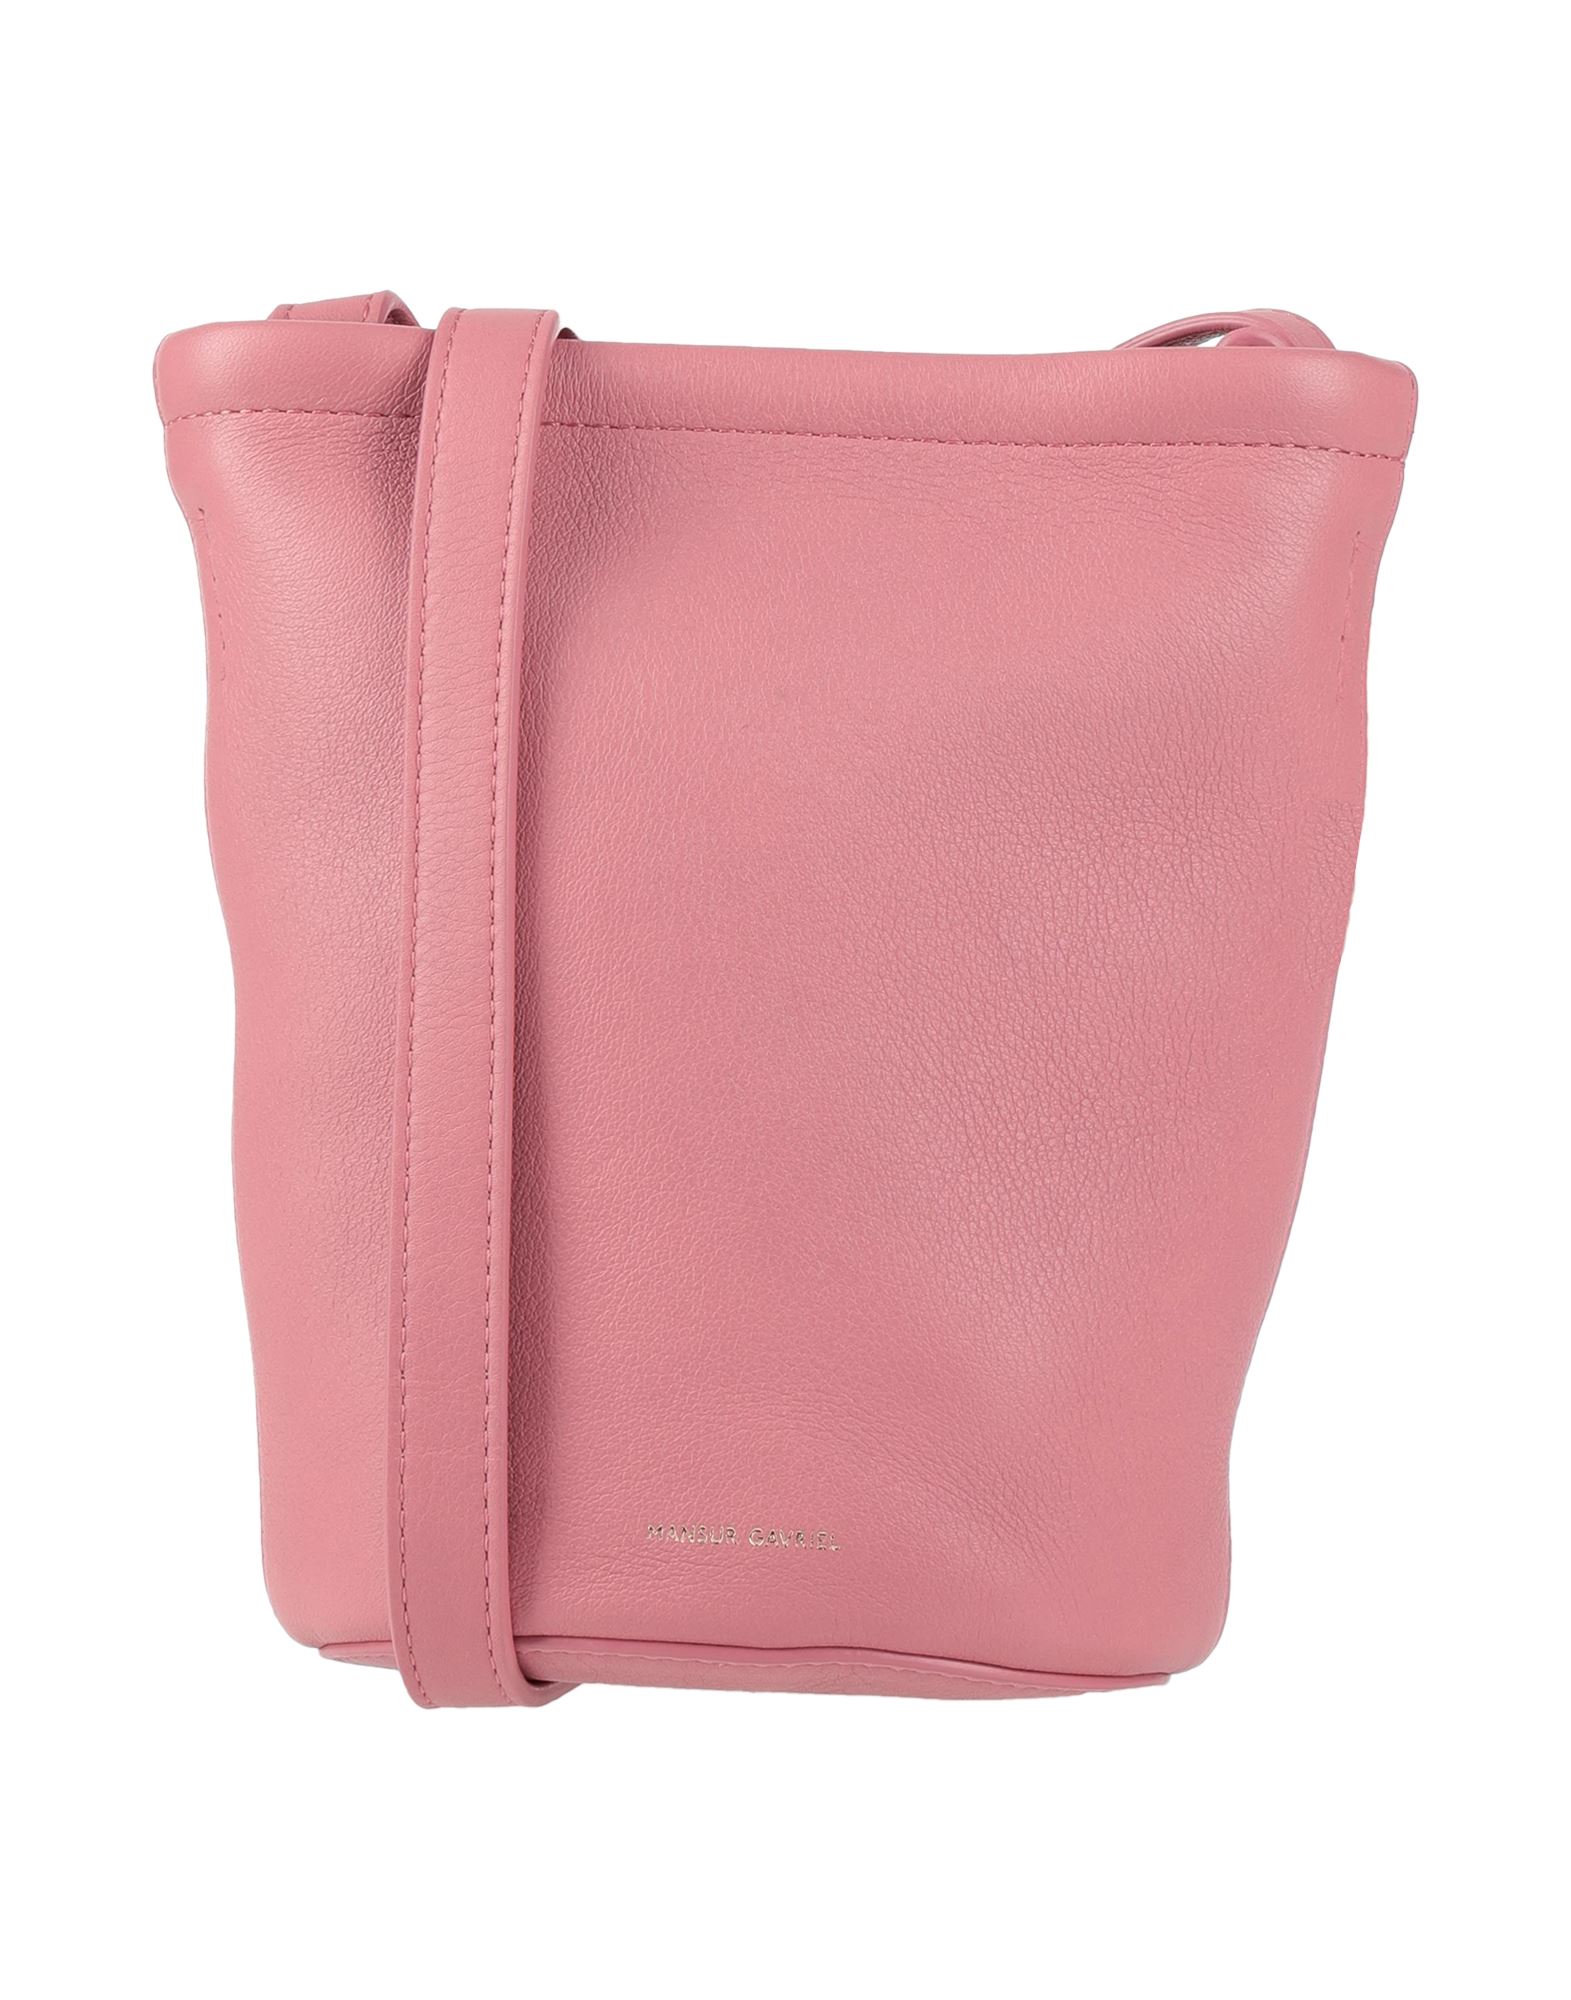 Mansur Gavriel Handbags In Pink